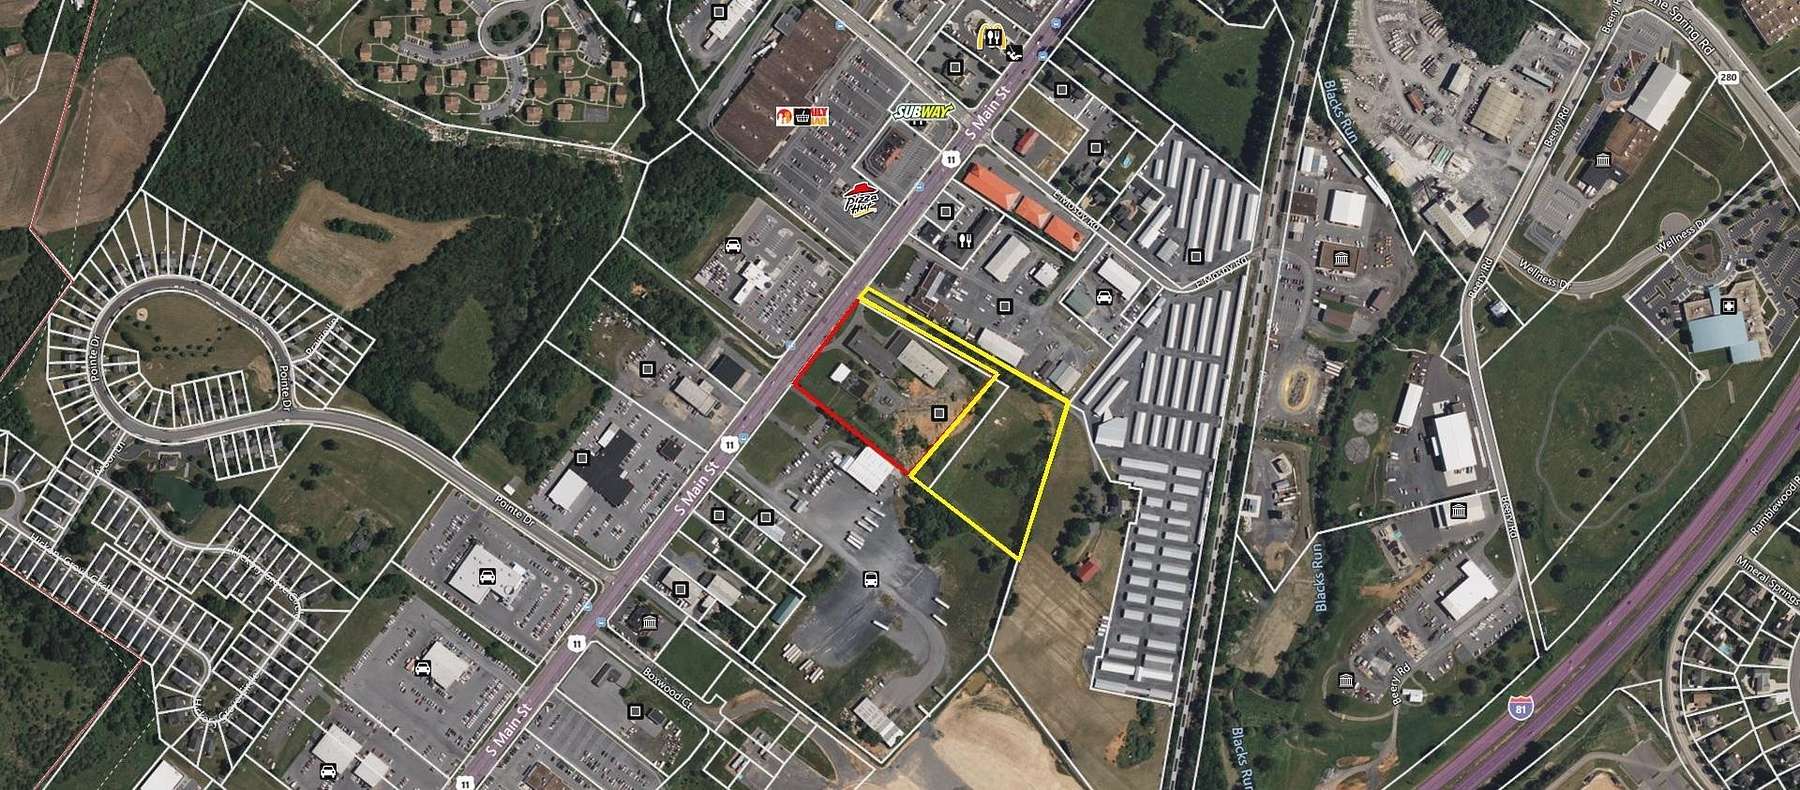 2.5 Acres of Commercial Land for Sale in Harrisonburg, Virginia